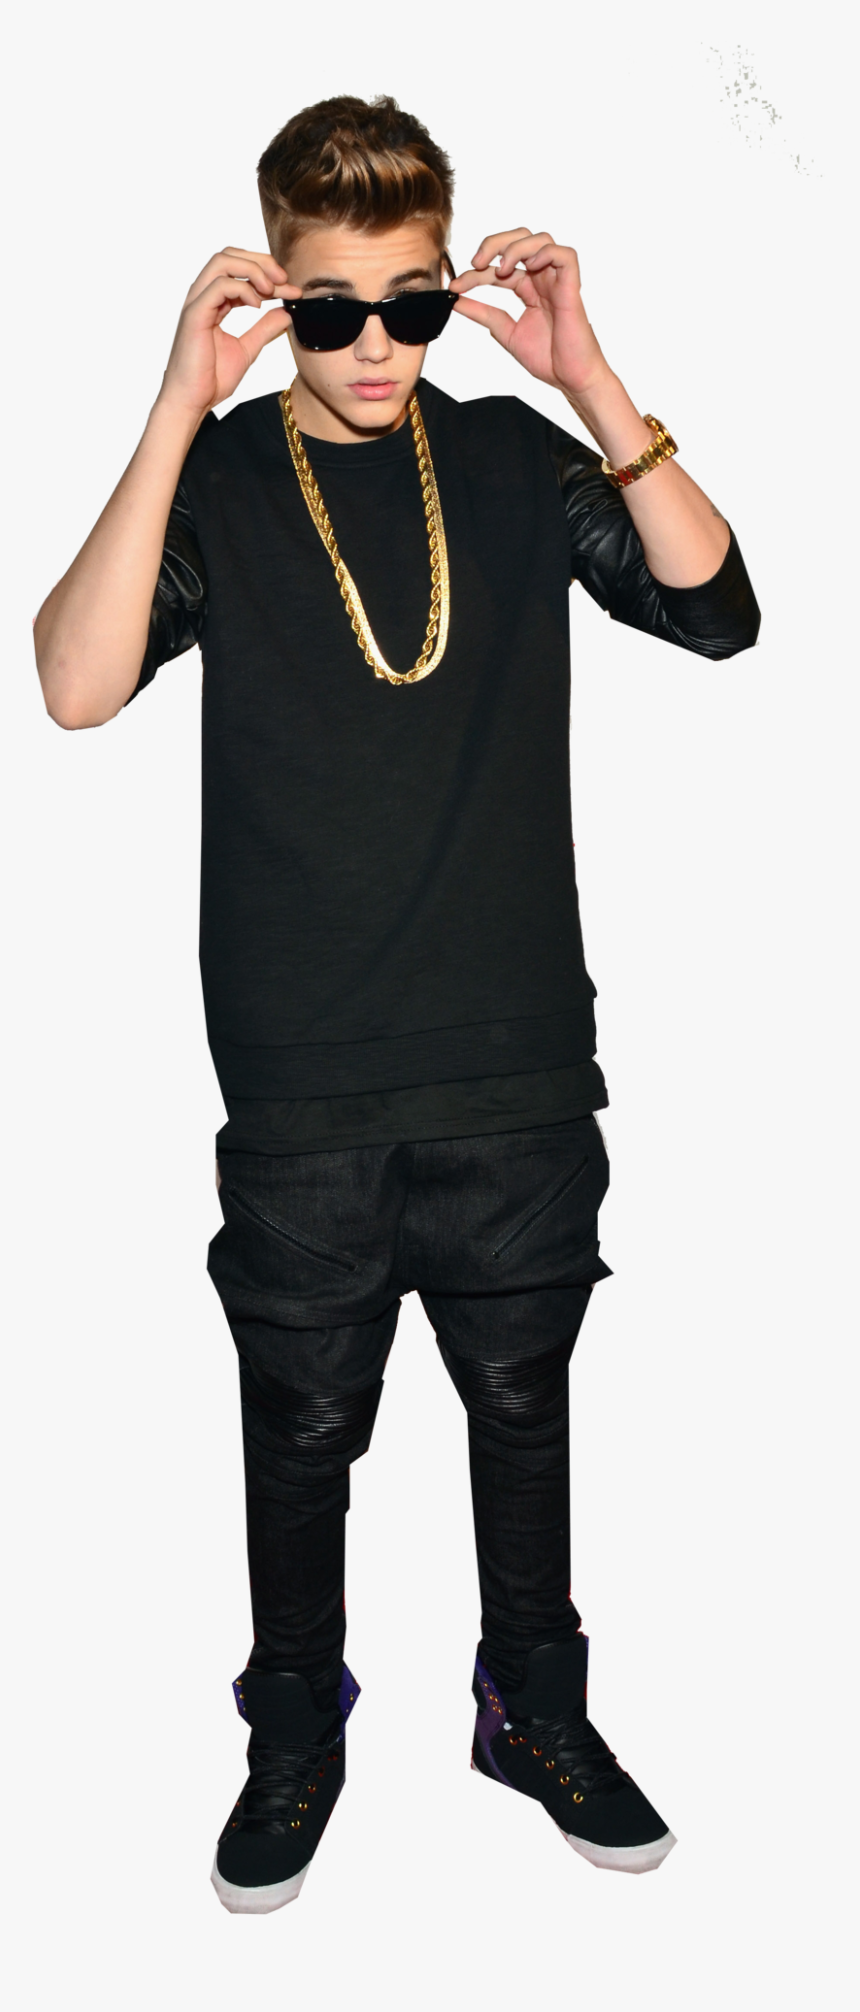 Justin Beiber Png - Justin Bieber Costume, Transparent Png, Free Download